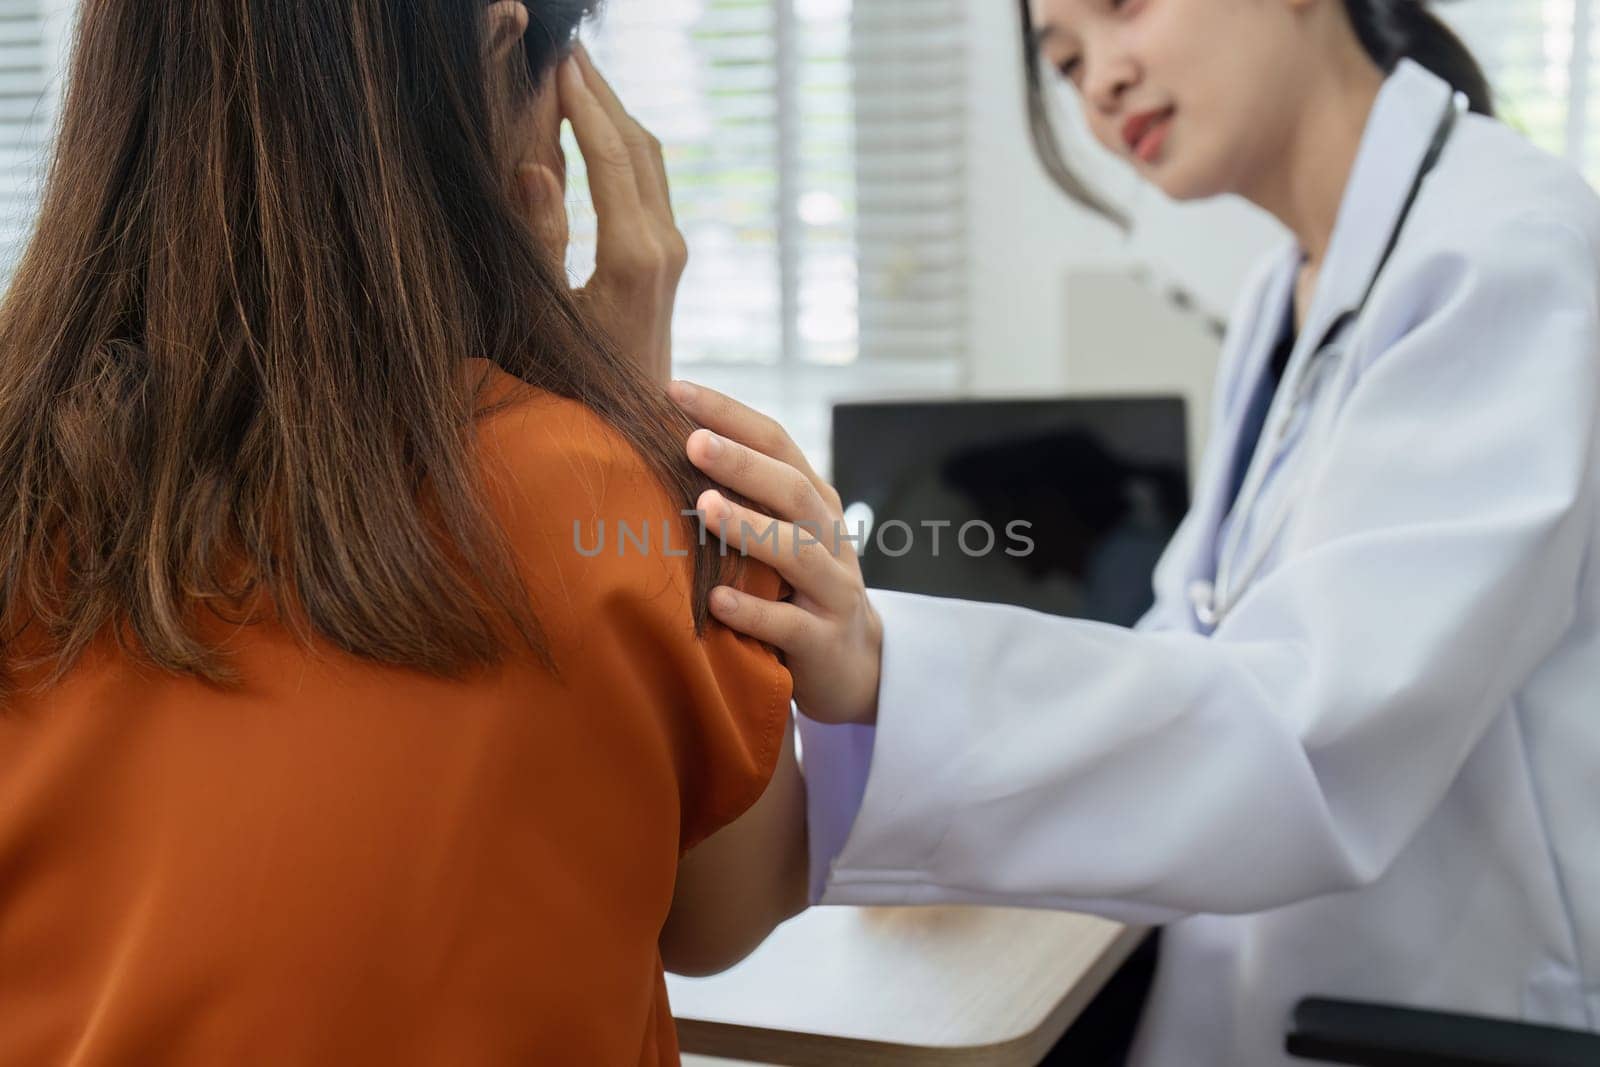 doctor comfort the patient holding shoulder, showing empathy to patient, encouraging patient.